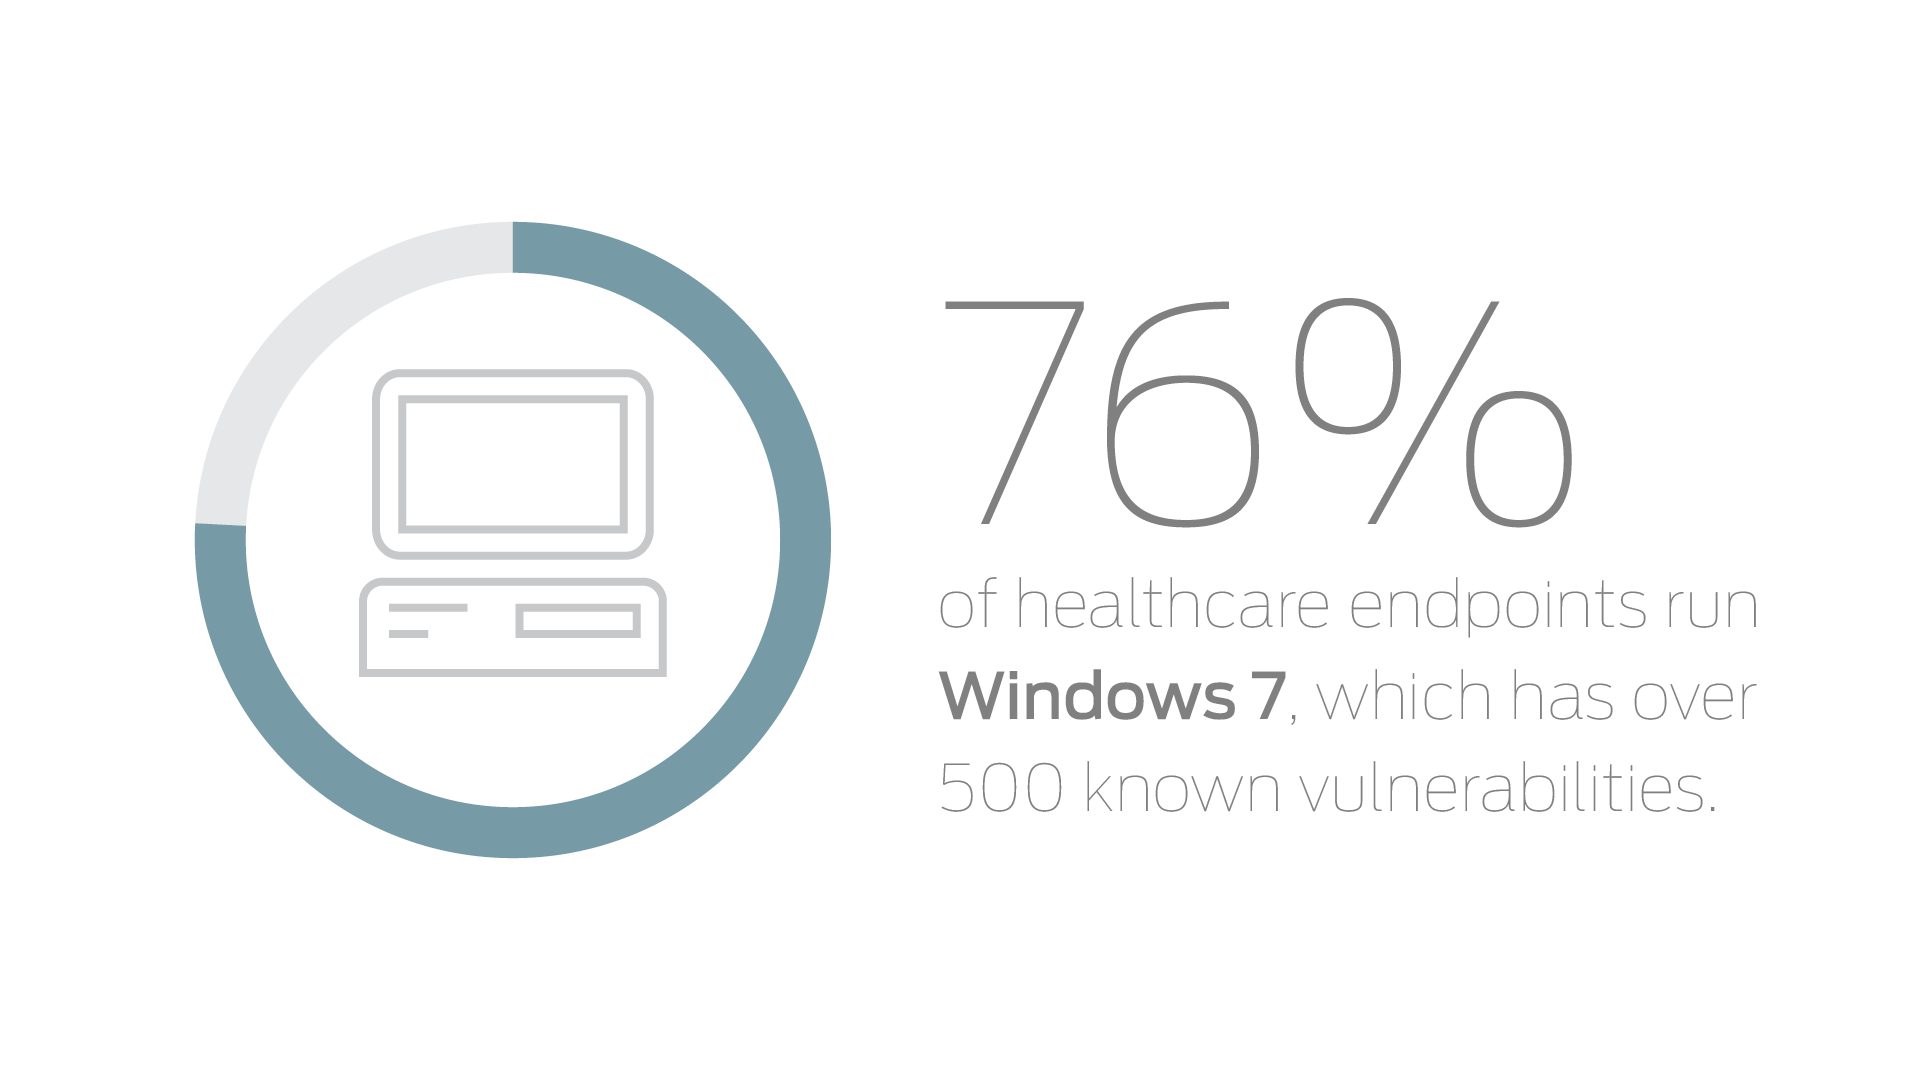 Healthcare Windows 7